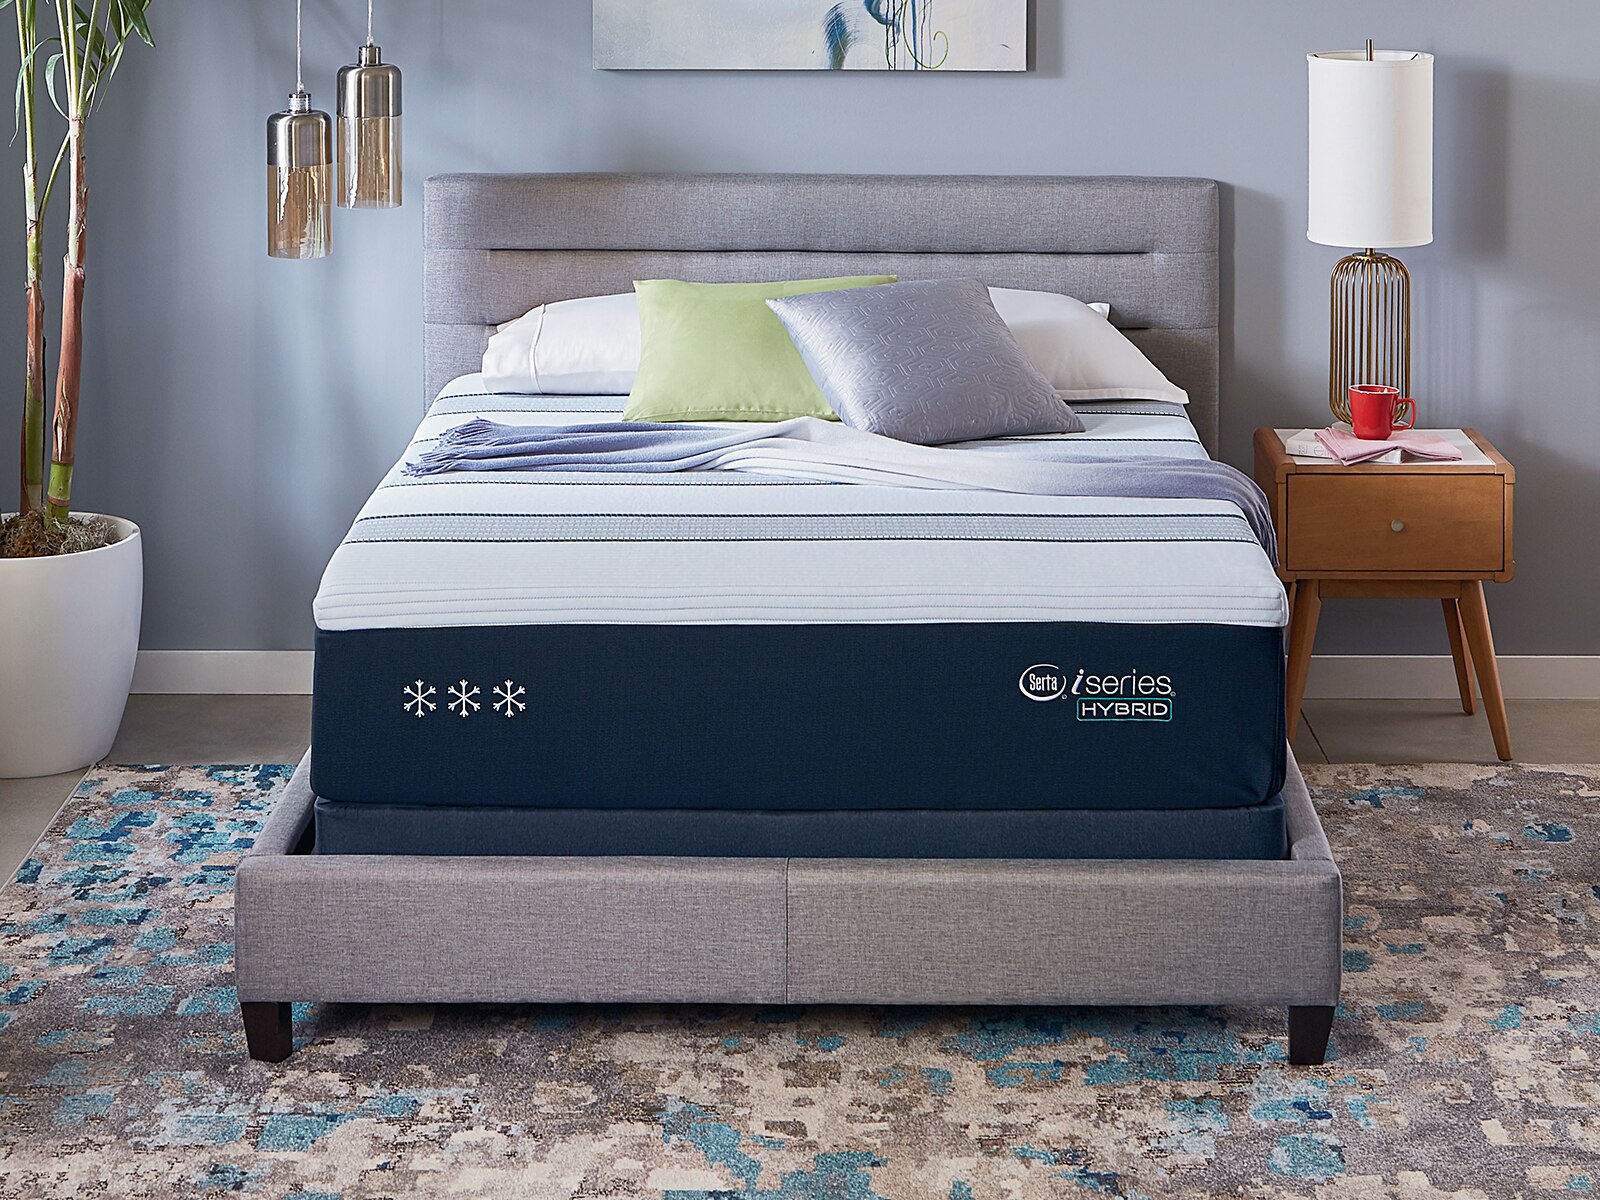 hybrid 13.5 plush mattress